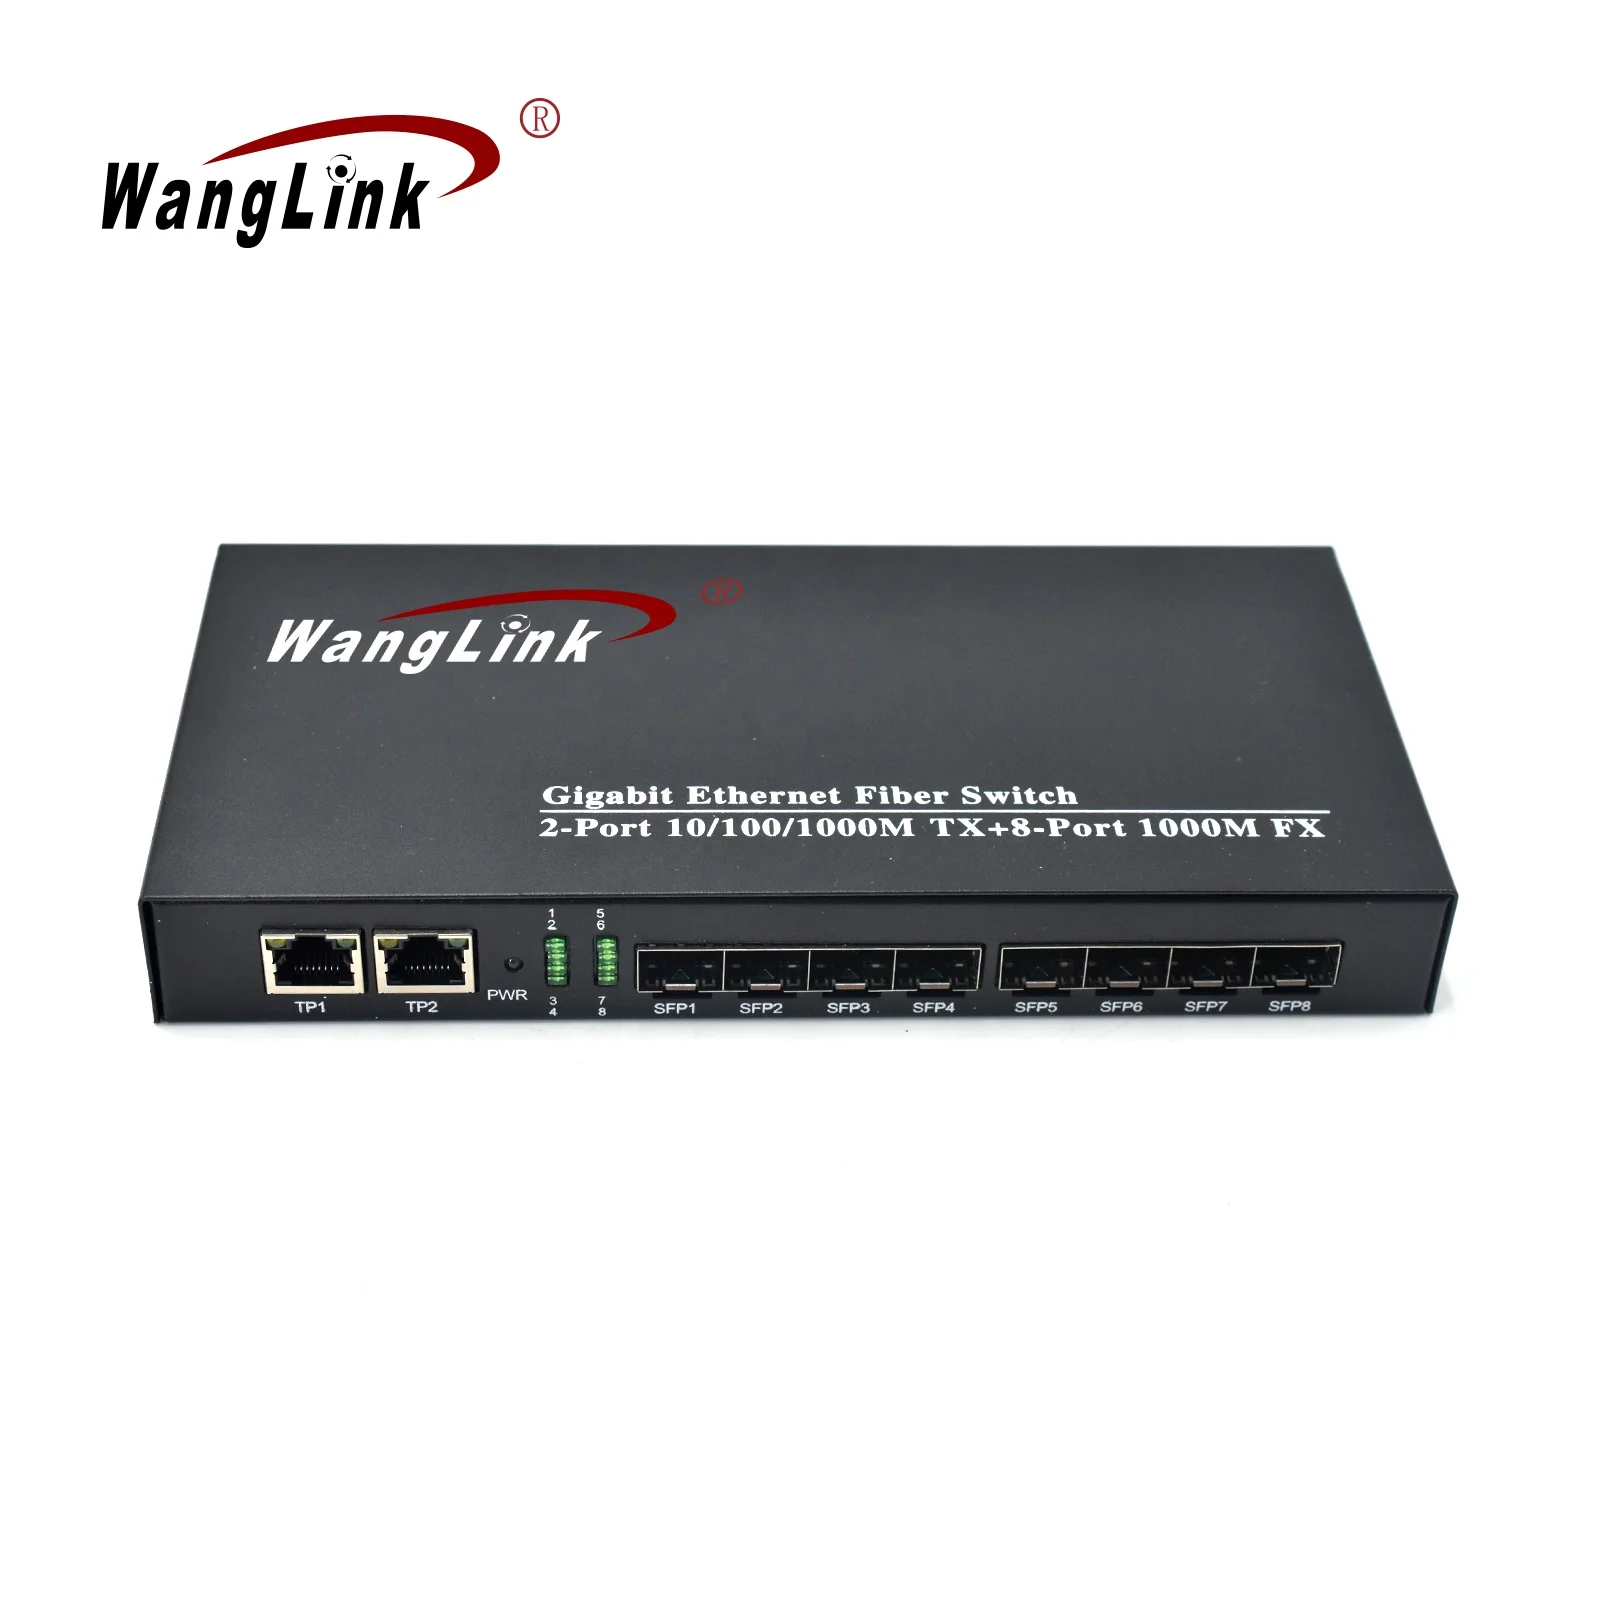 Wanglink 10/100/1000 M Gigabit BIDI SM 8 SFP& 2 RJ45 Ports switch 8 port SFP Single Fiber Media Converter ruijie reyee desktop 9 port cloud management router including 8 gigabit electrical ports and 1 gigabit sfp port supports 1 wan port 5 lan ports